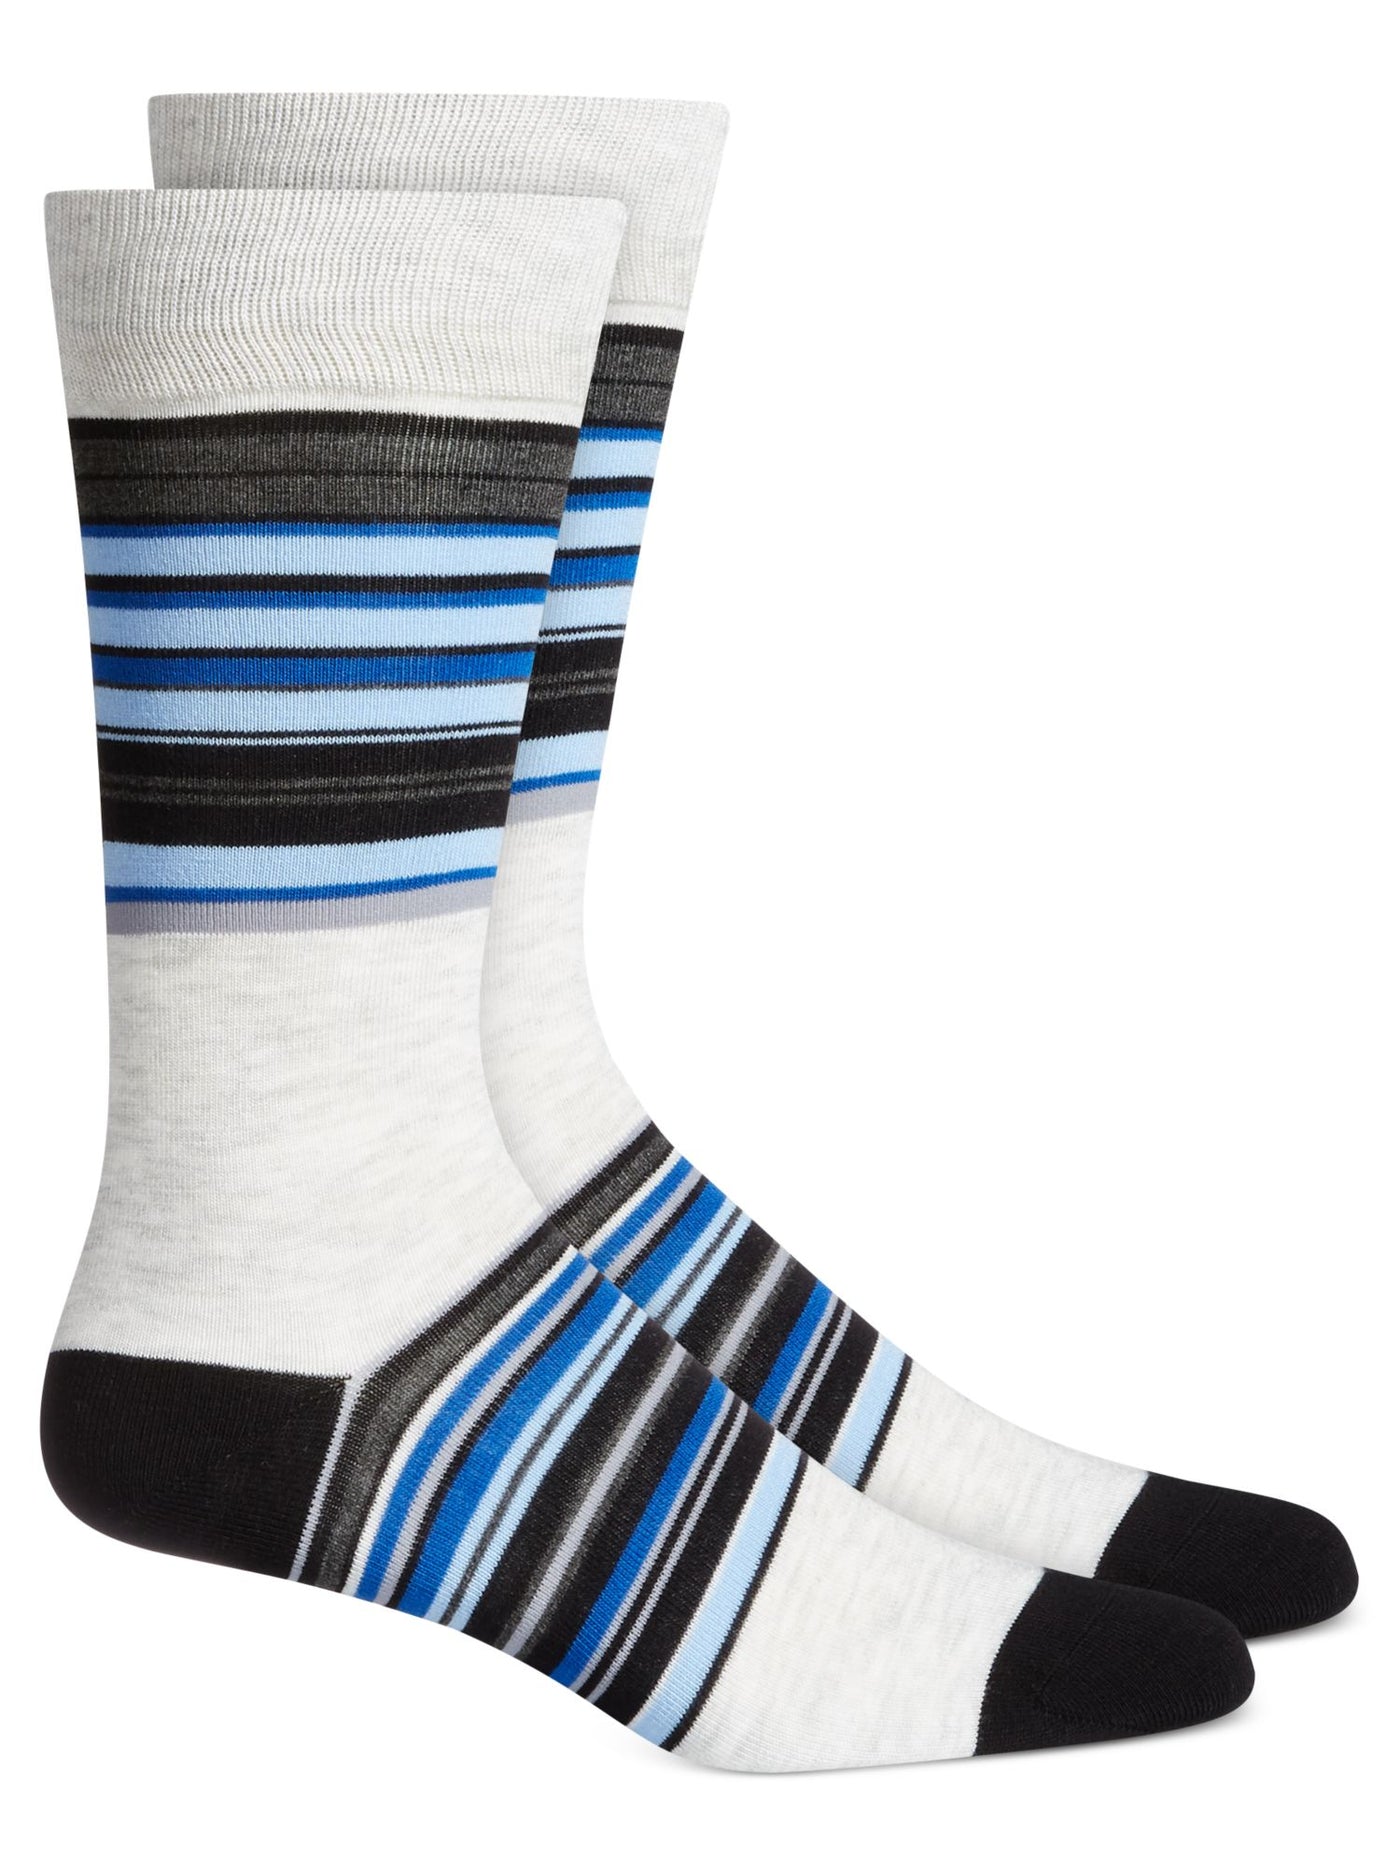 ALFATECH BY ALFANI Mens Eternal Blue Striped Comfortable Seamless Dress Crew Socks 7-12